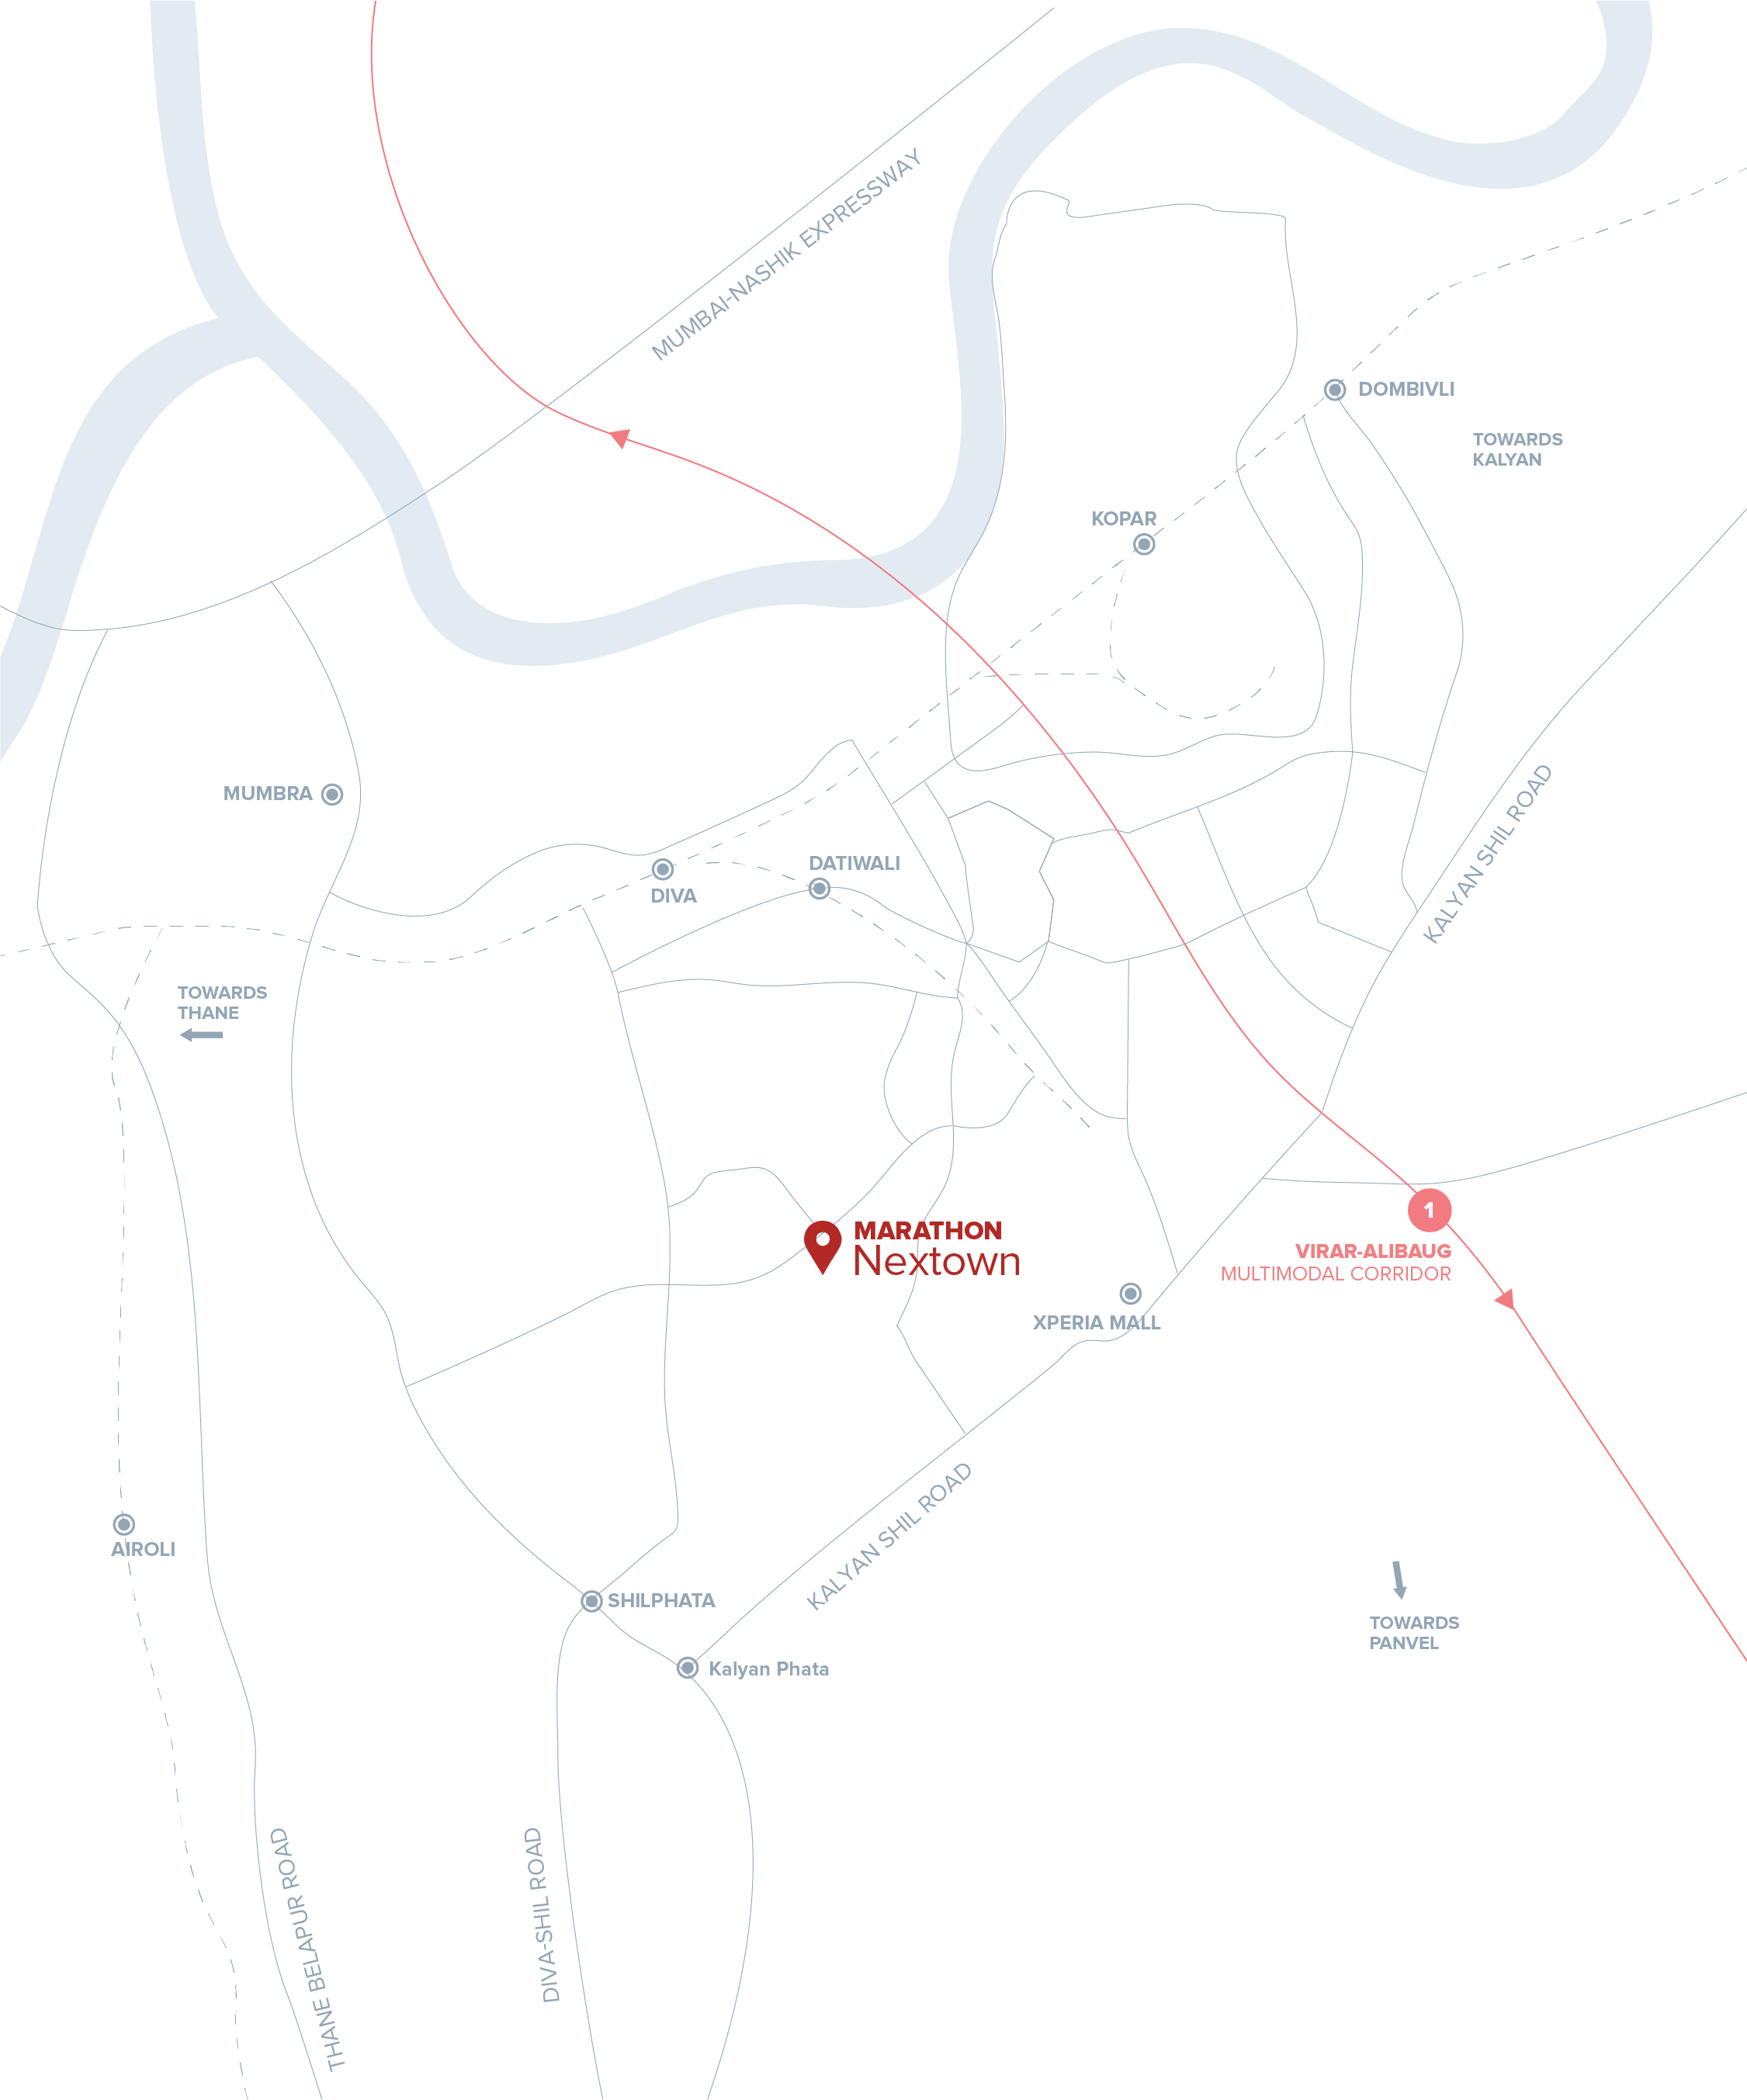 Virar-Alibaug multimodal corridor